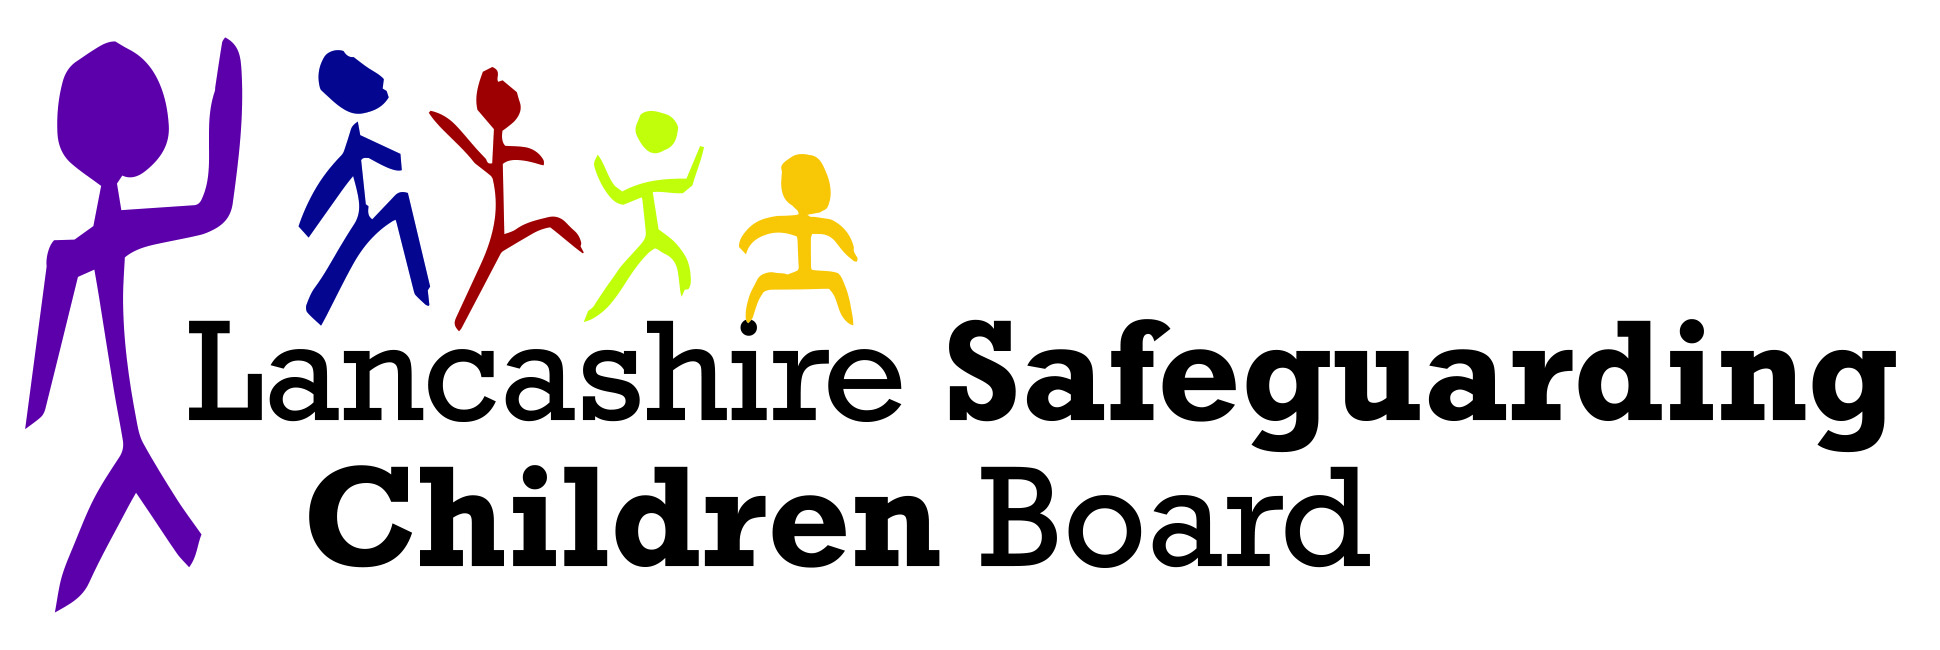 Lancashire Safeguarding Children Board _logo